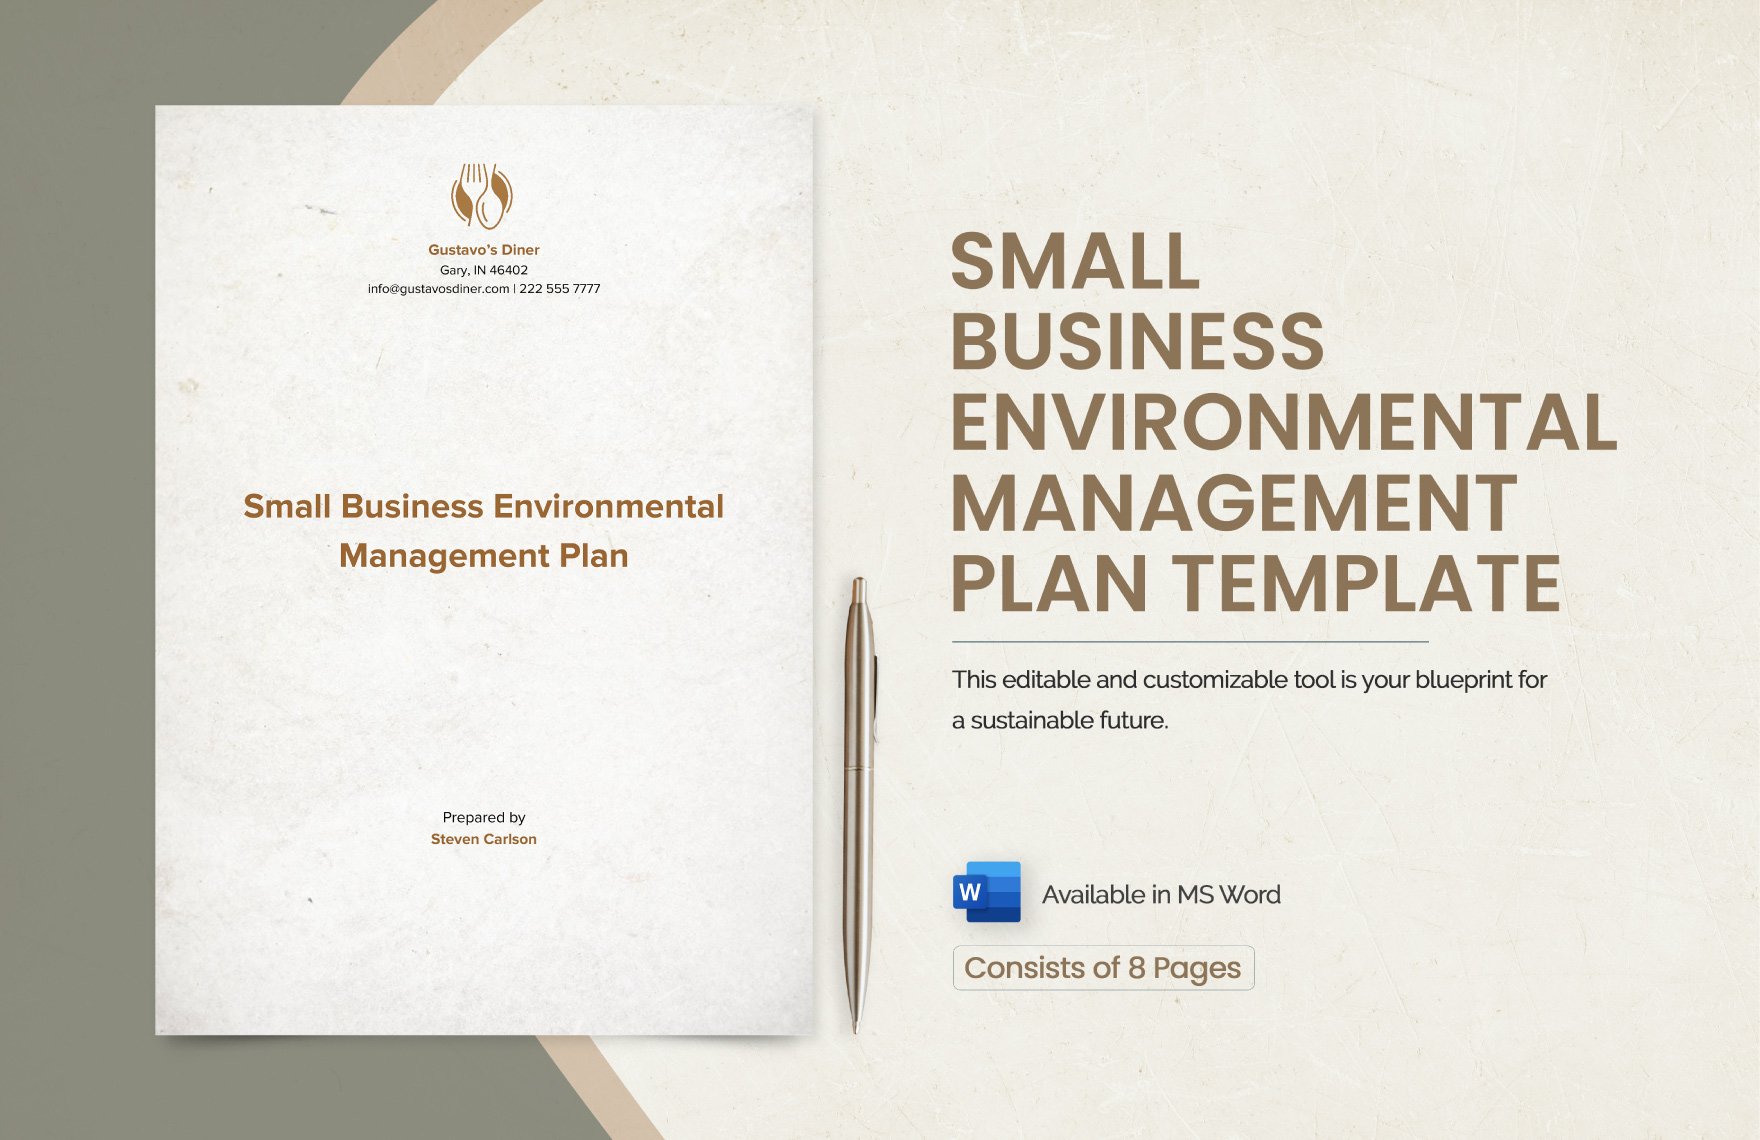 Small Business Environmental Management Plan Template